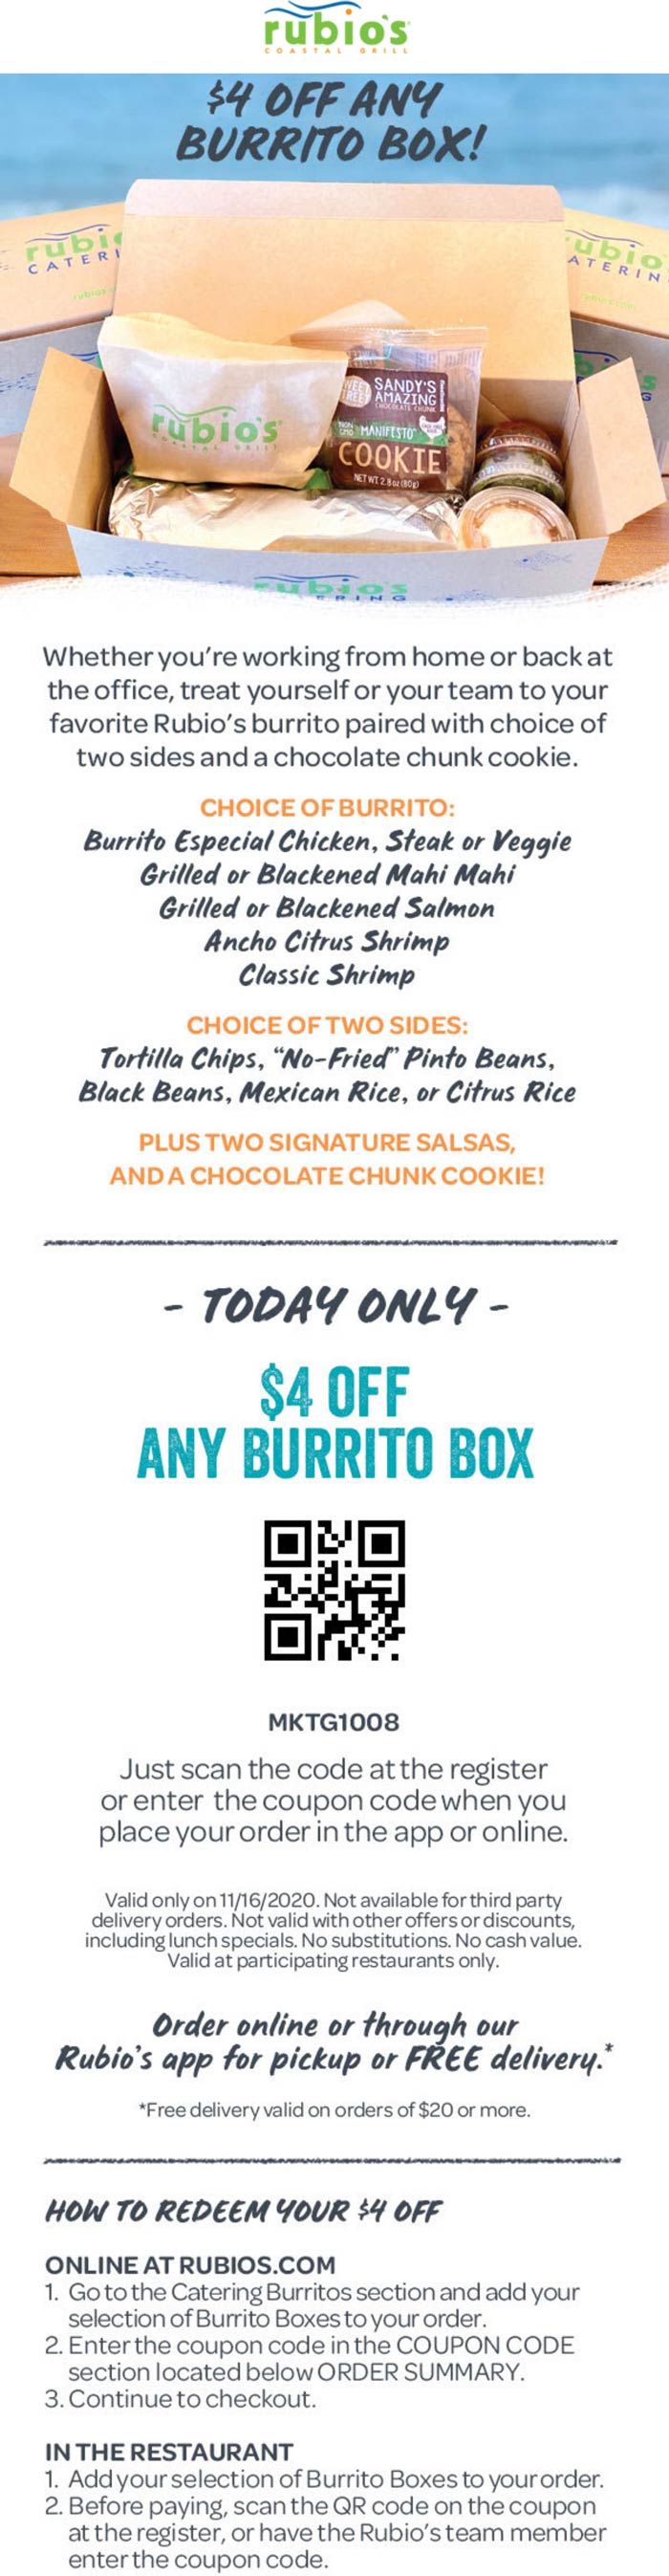 Rubios restaurants Coupon  $4 off a burrito box today at Rubios Coastal Grill #rubios 